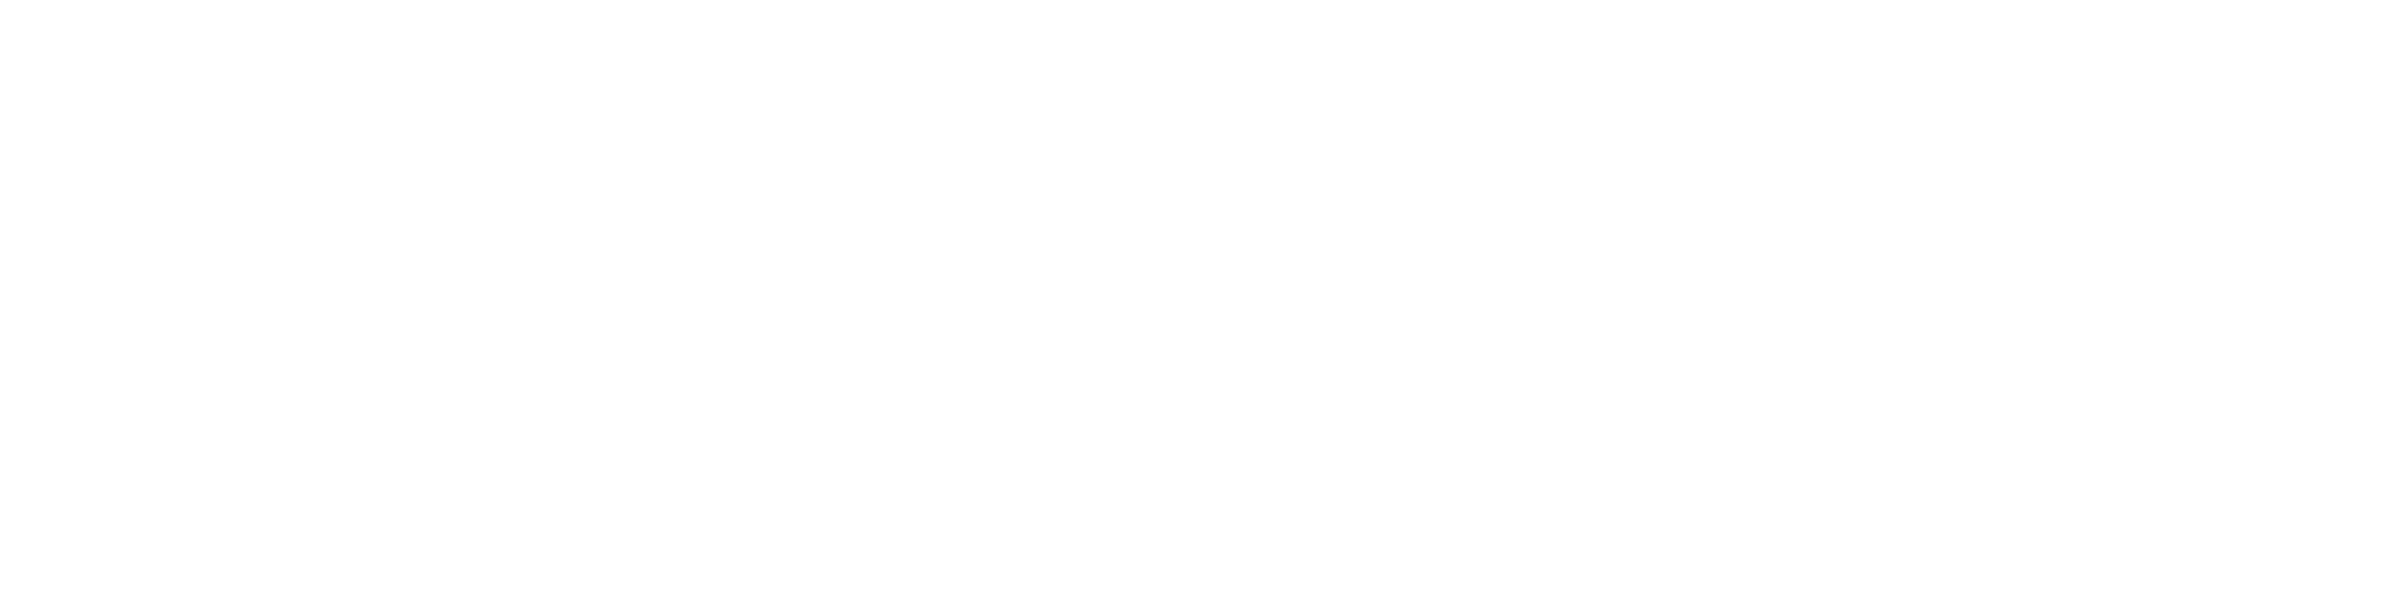 ISANS-Logo_white-transparent